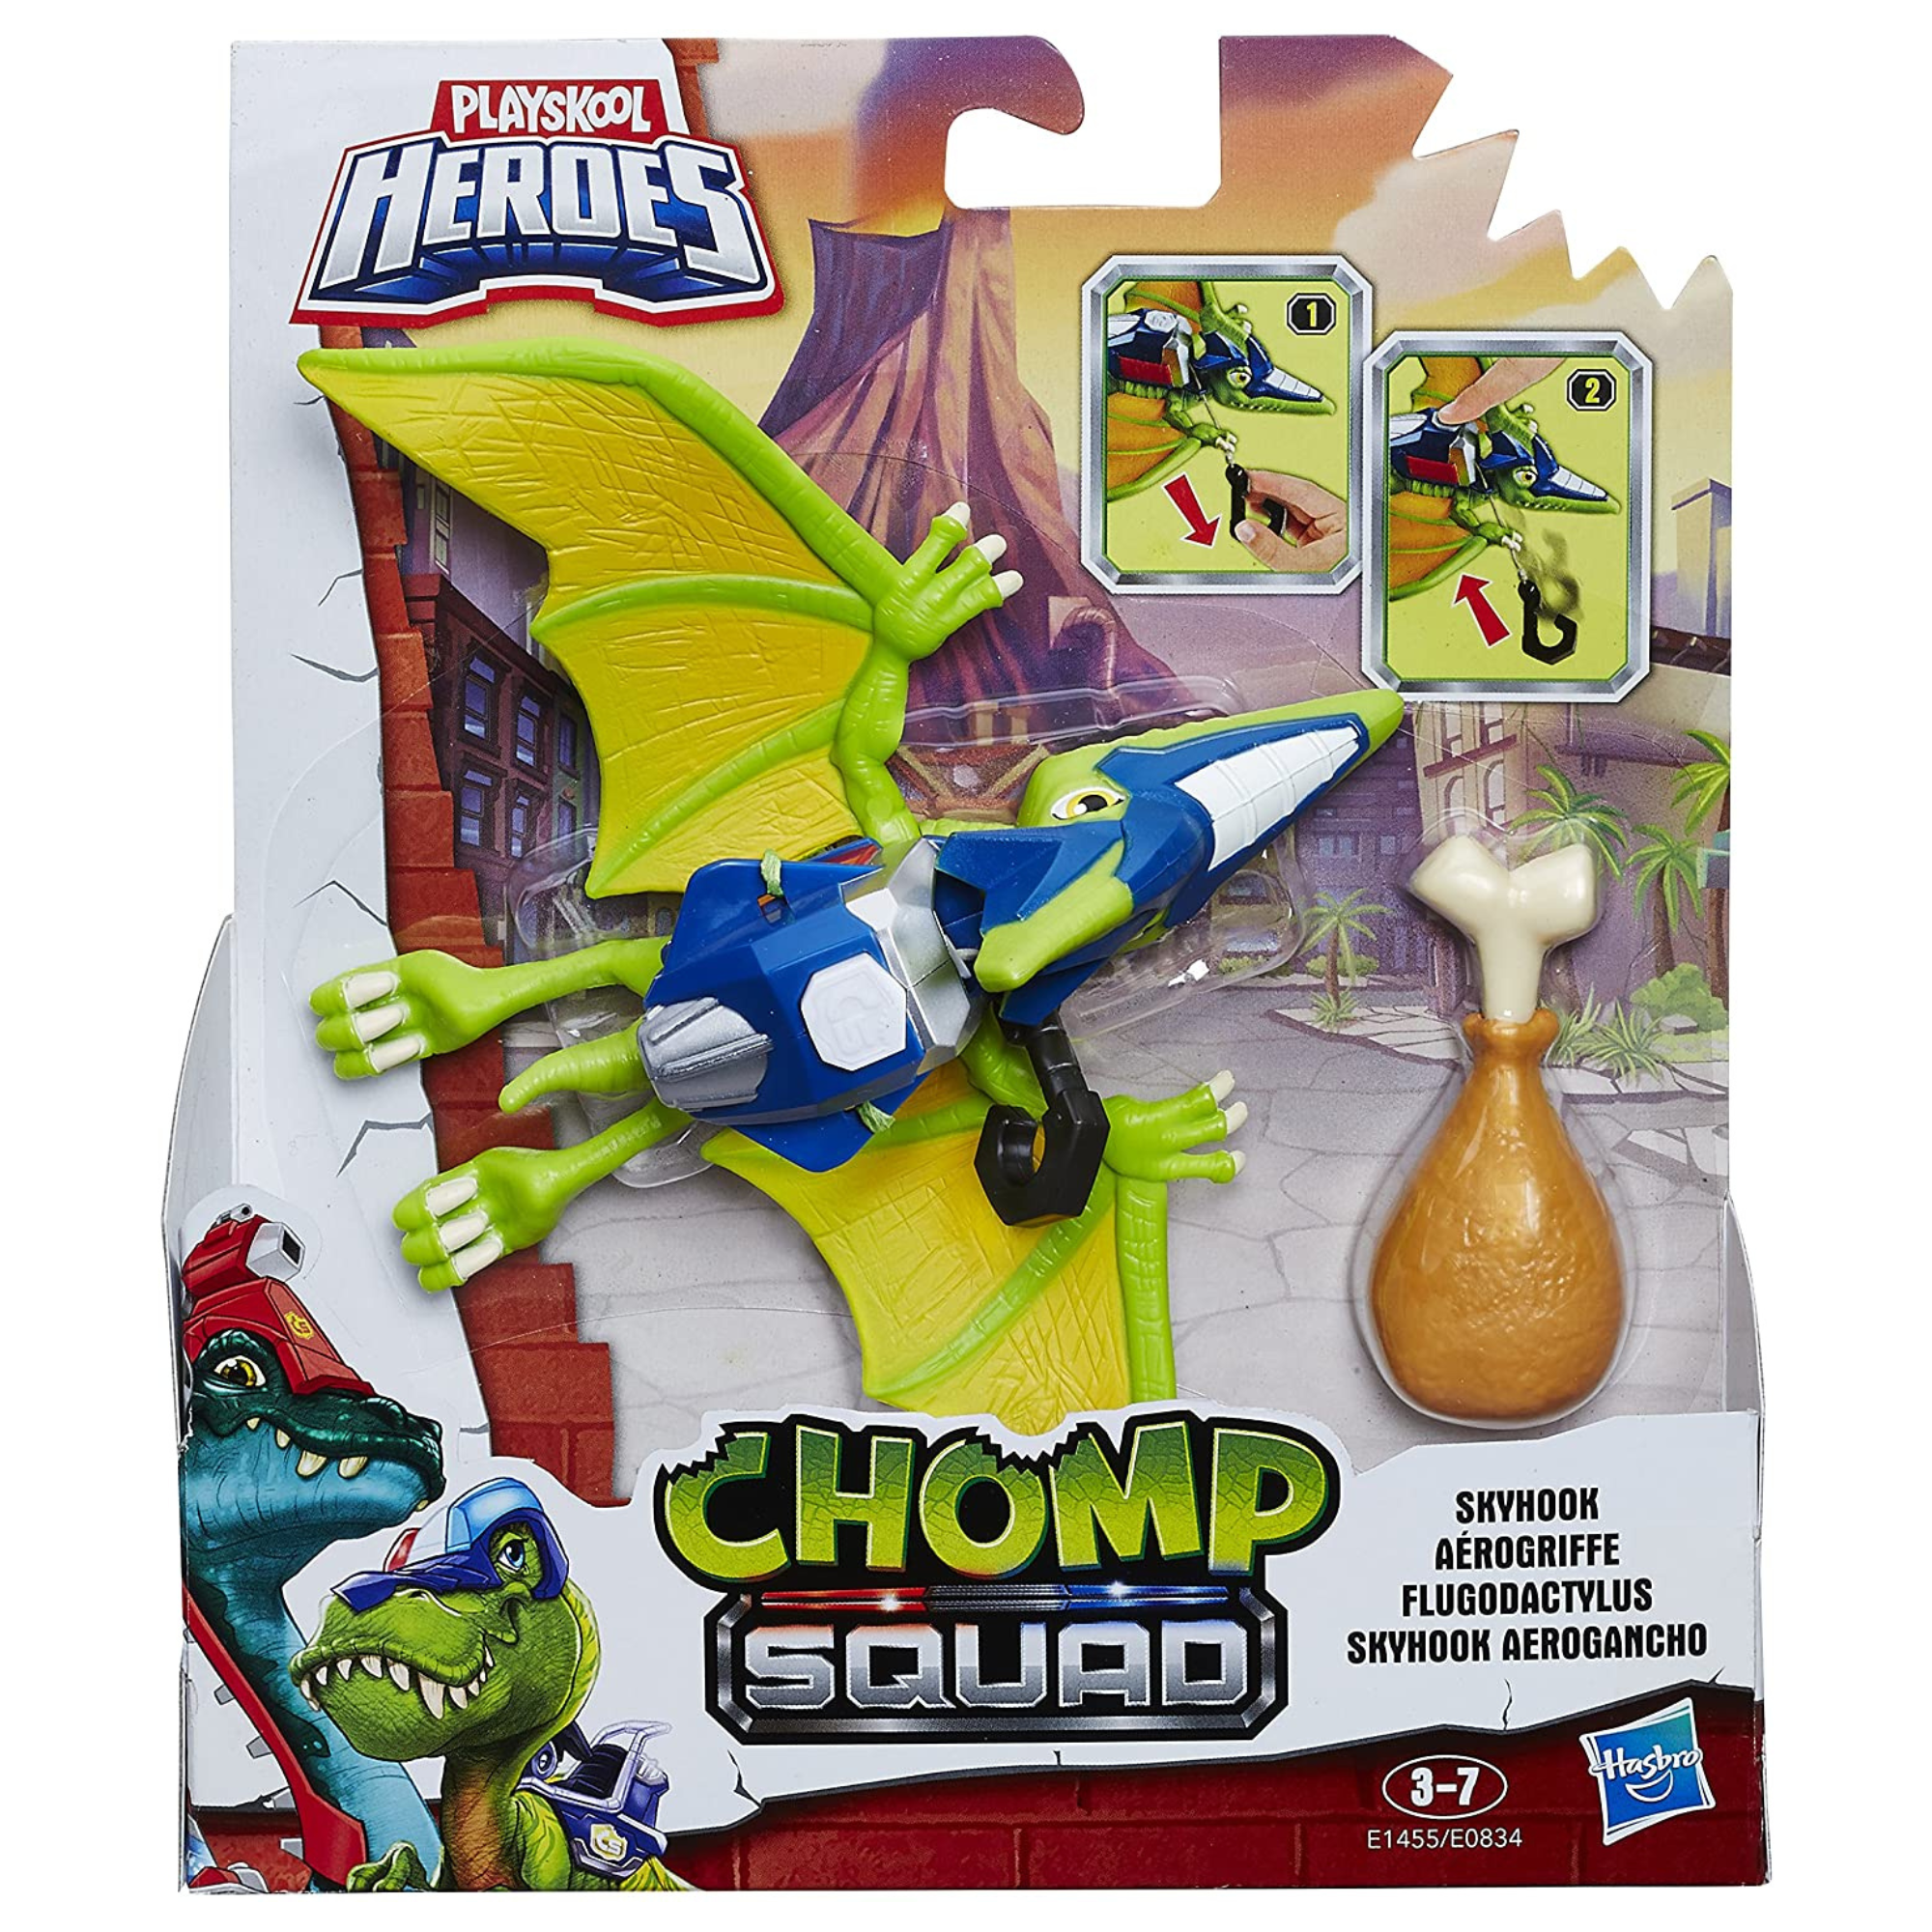 Playskool Heroes Chomp Squad Skyhook Dinosaur Action Figure - Toptoys2u